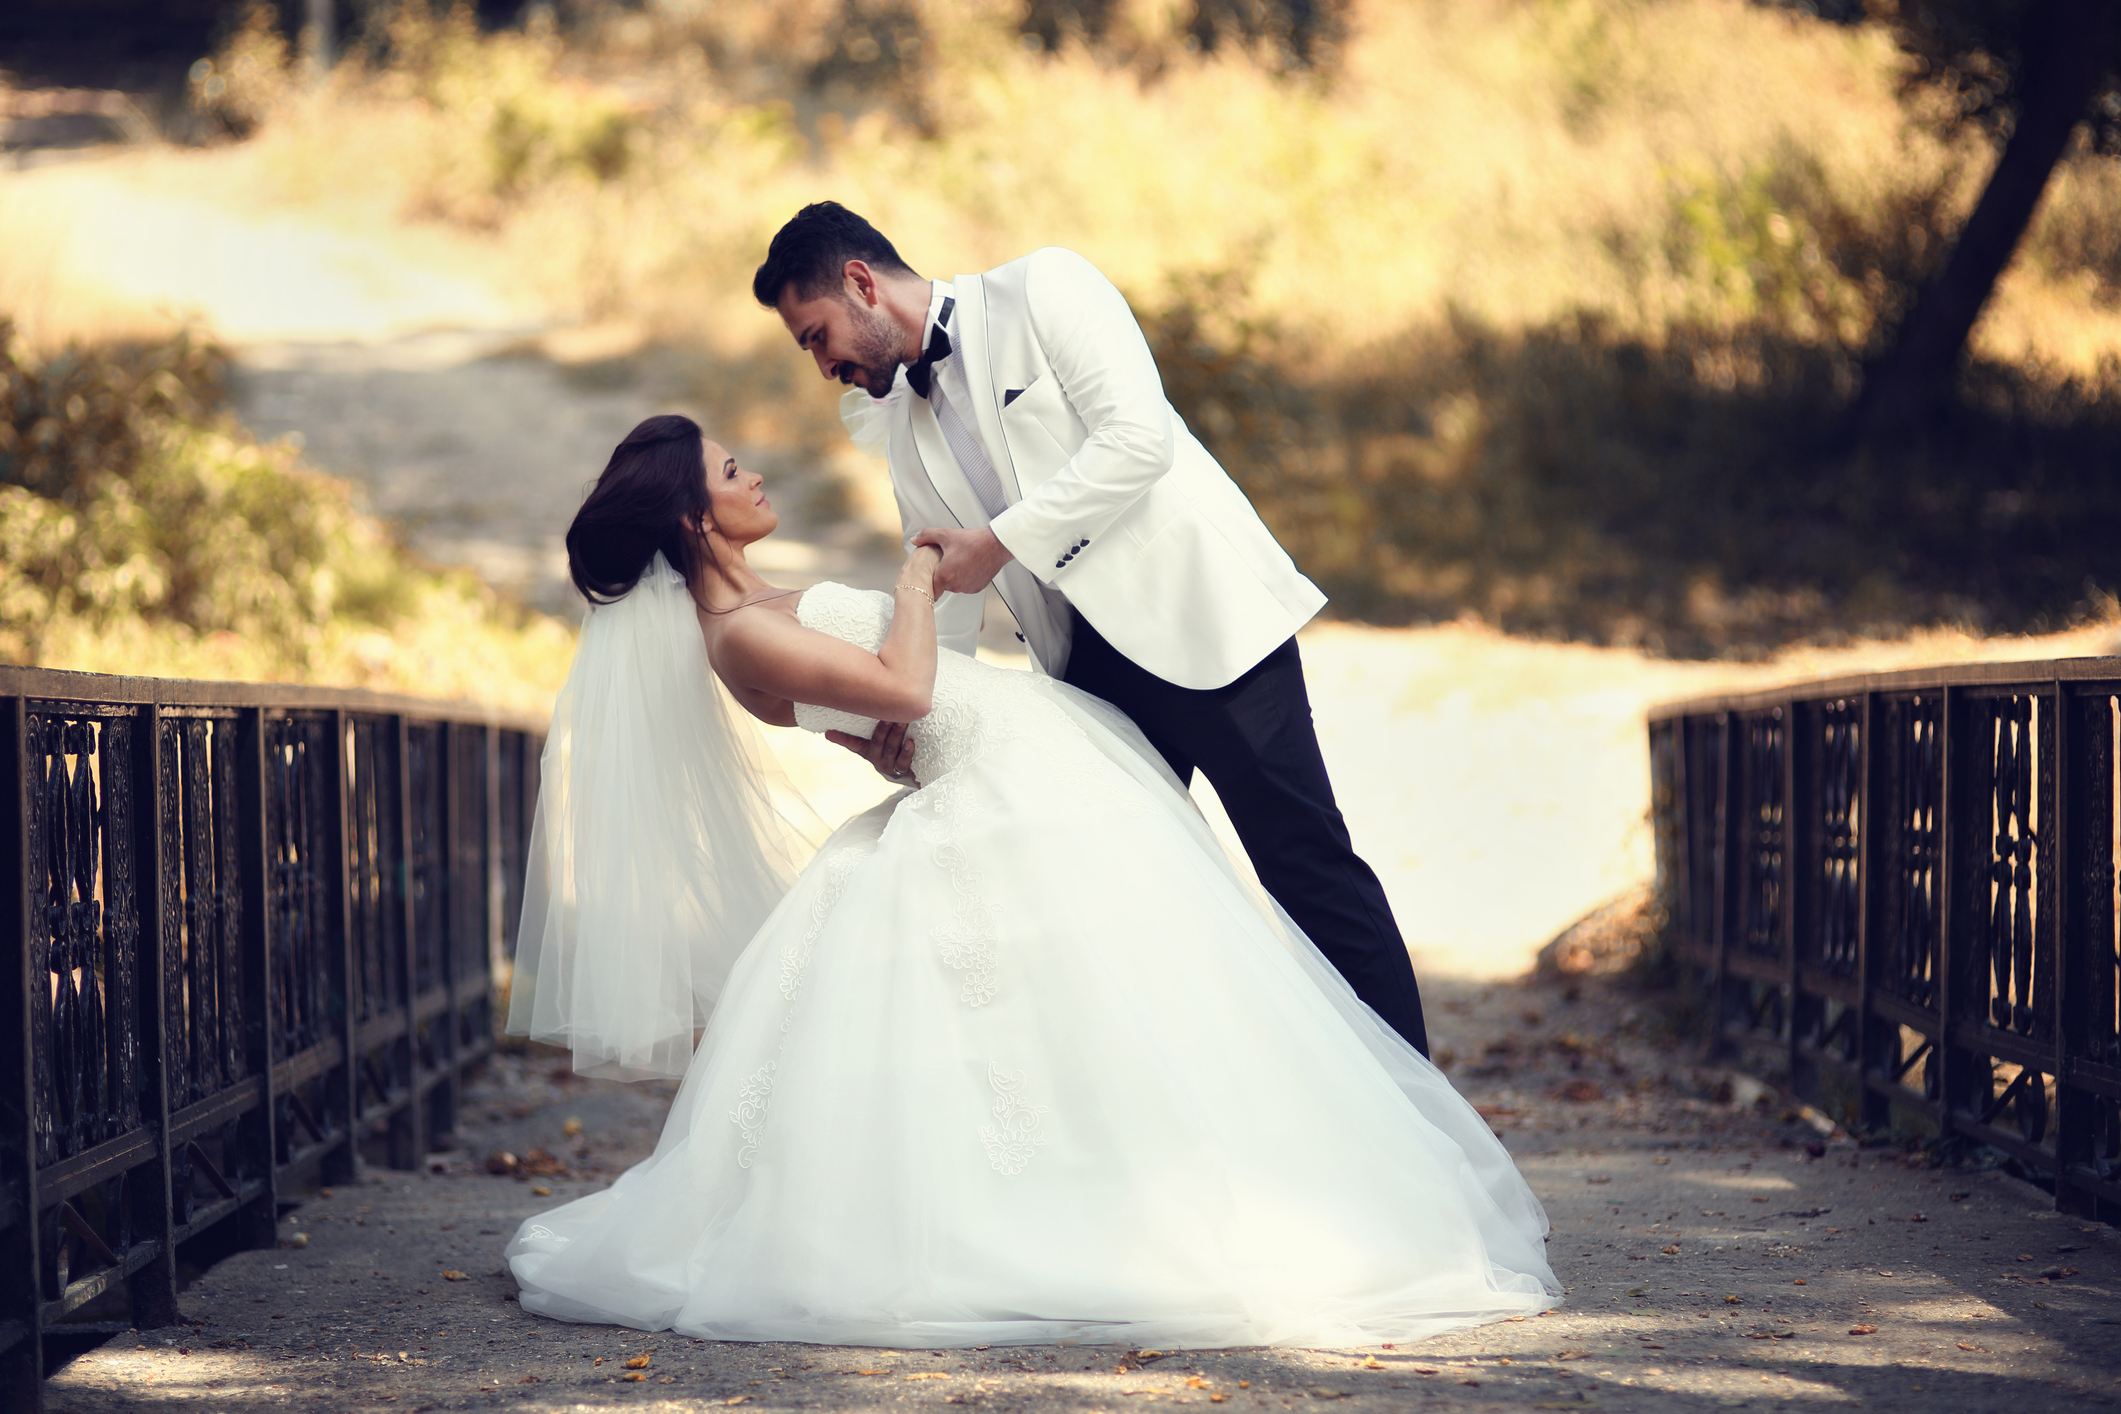 Hochzeit - Shooting - Ihr mobiler Fotograf in Ihrer Umgebung - 
Malik Özipek - 0175 / 38 55 039